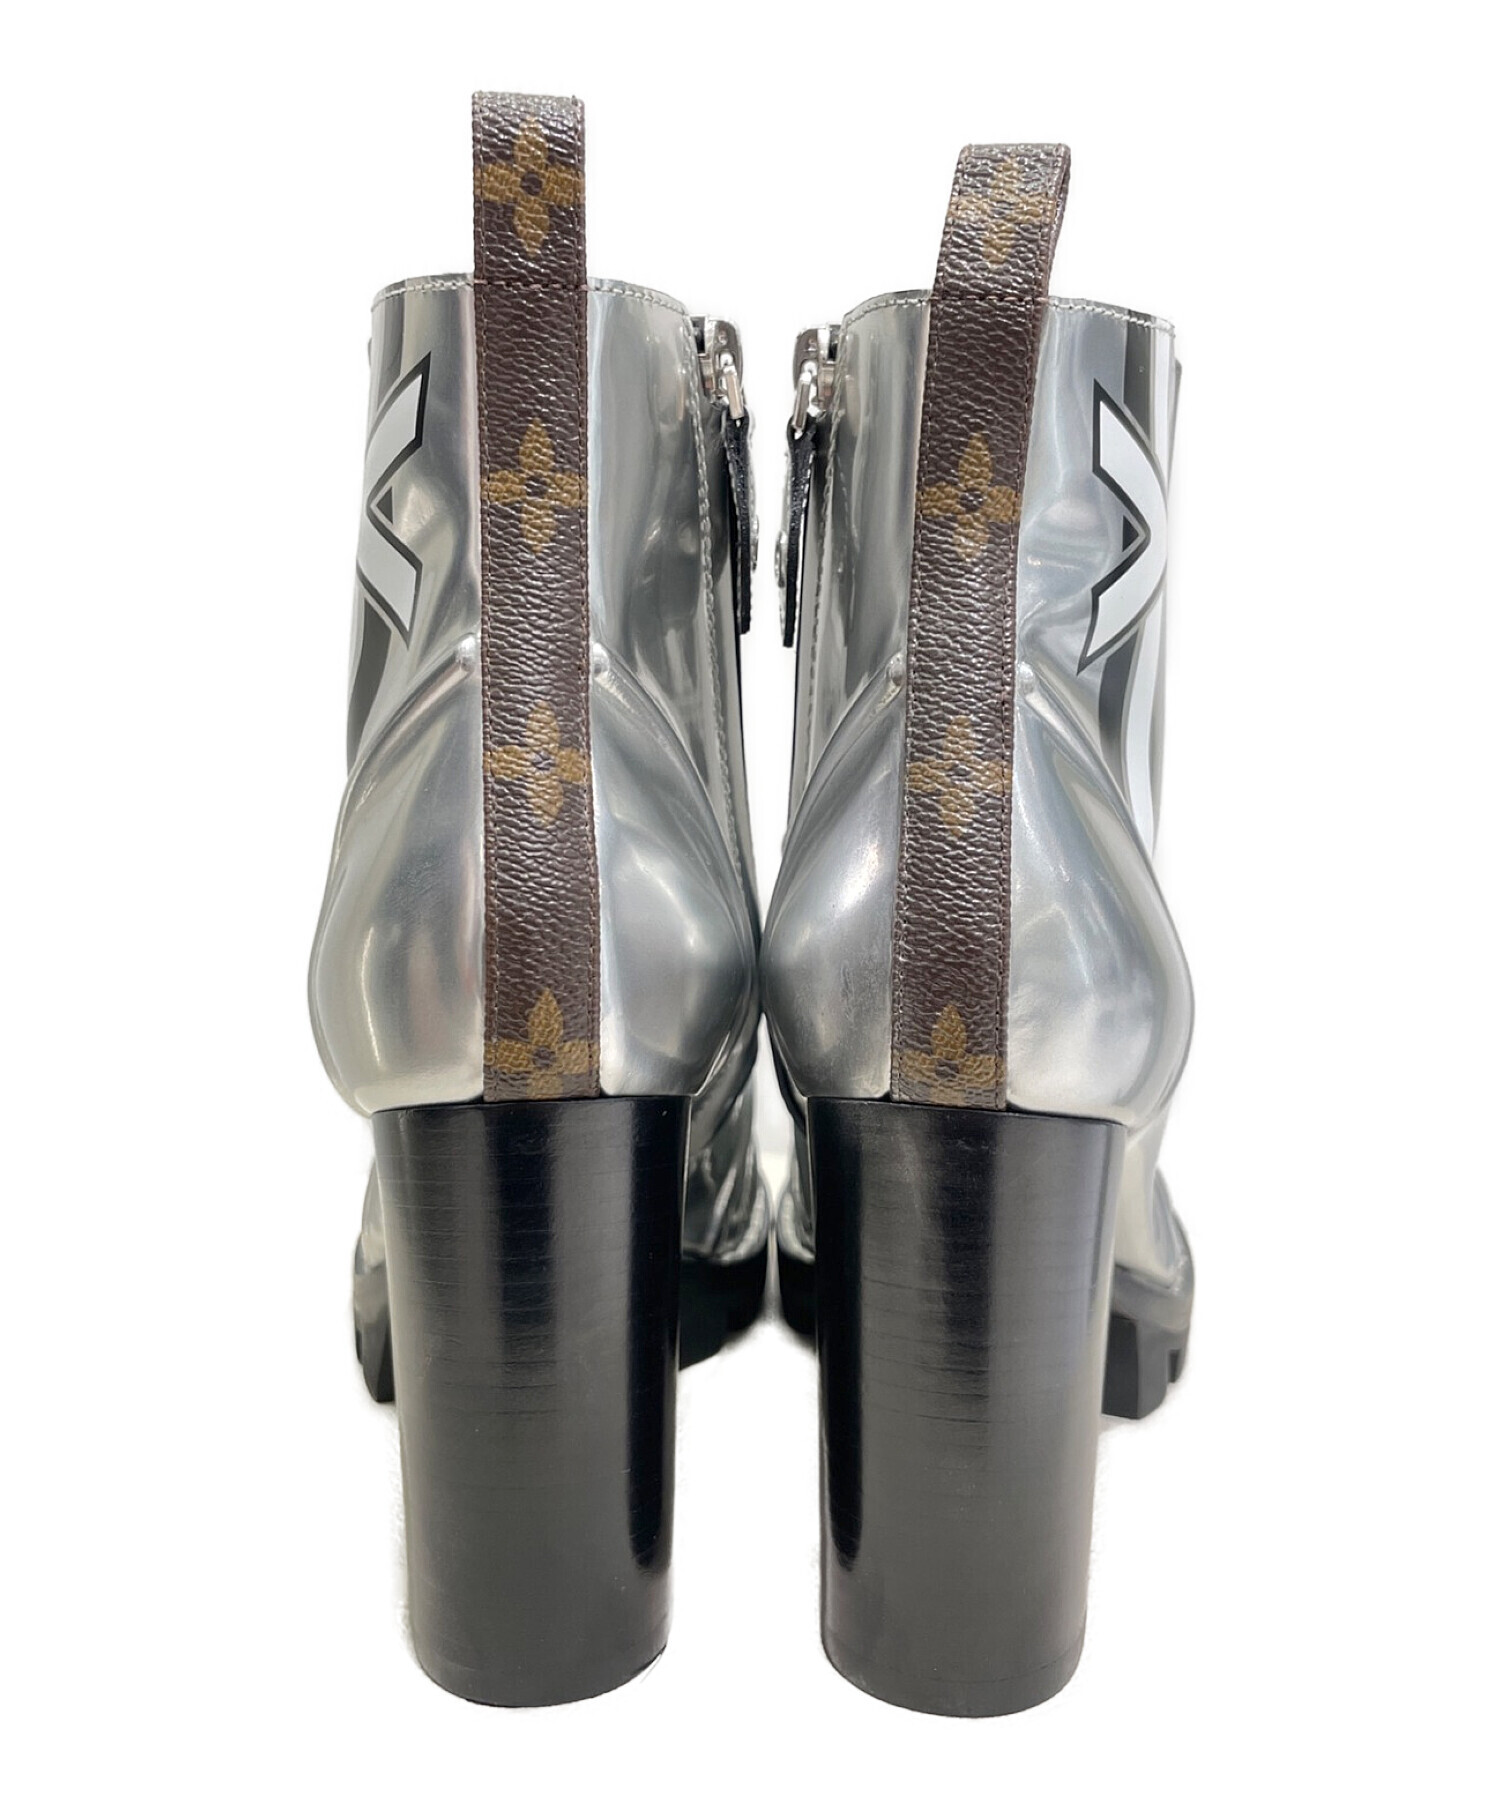 Louis Vuitton Spaceship Star Trail Ankle Boots